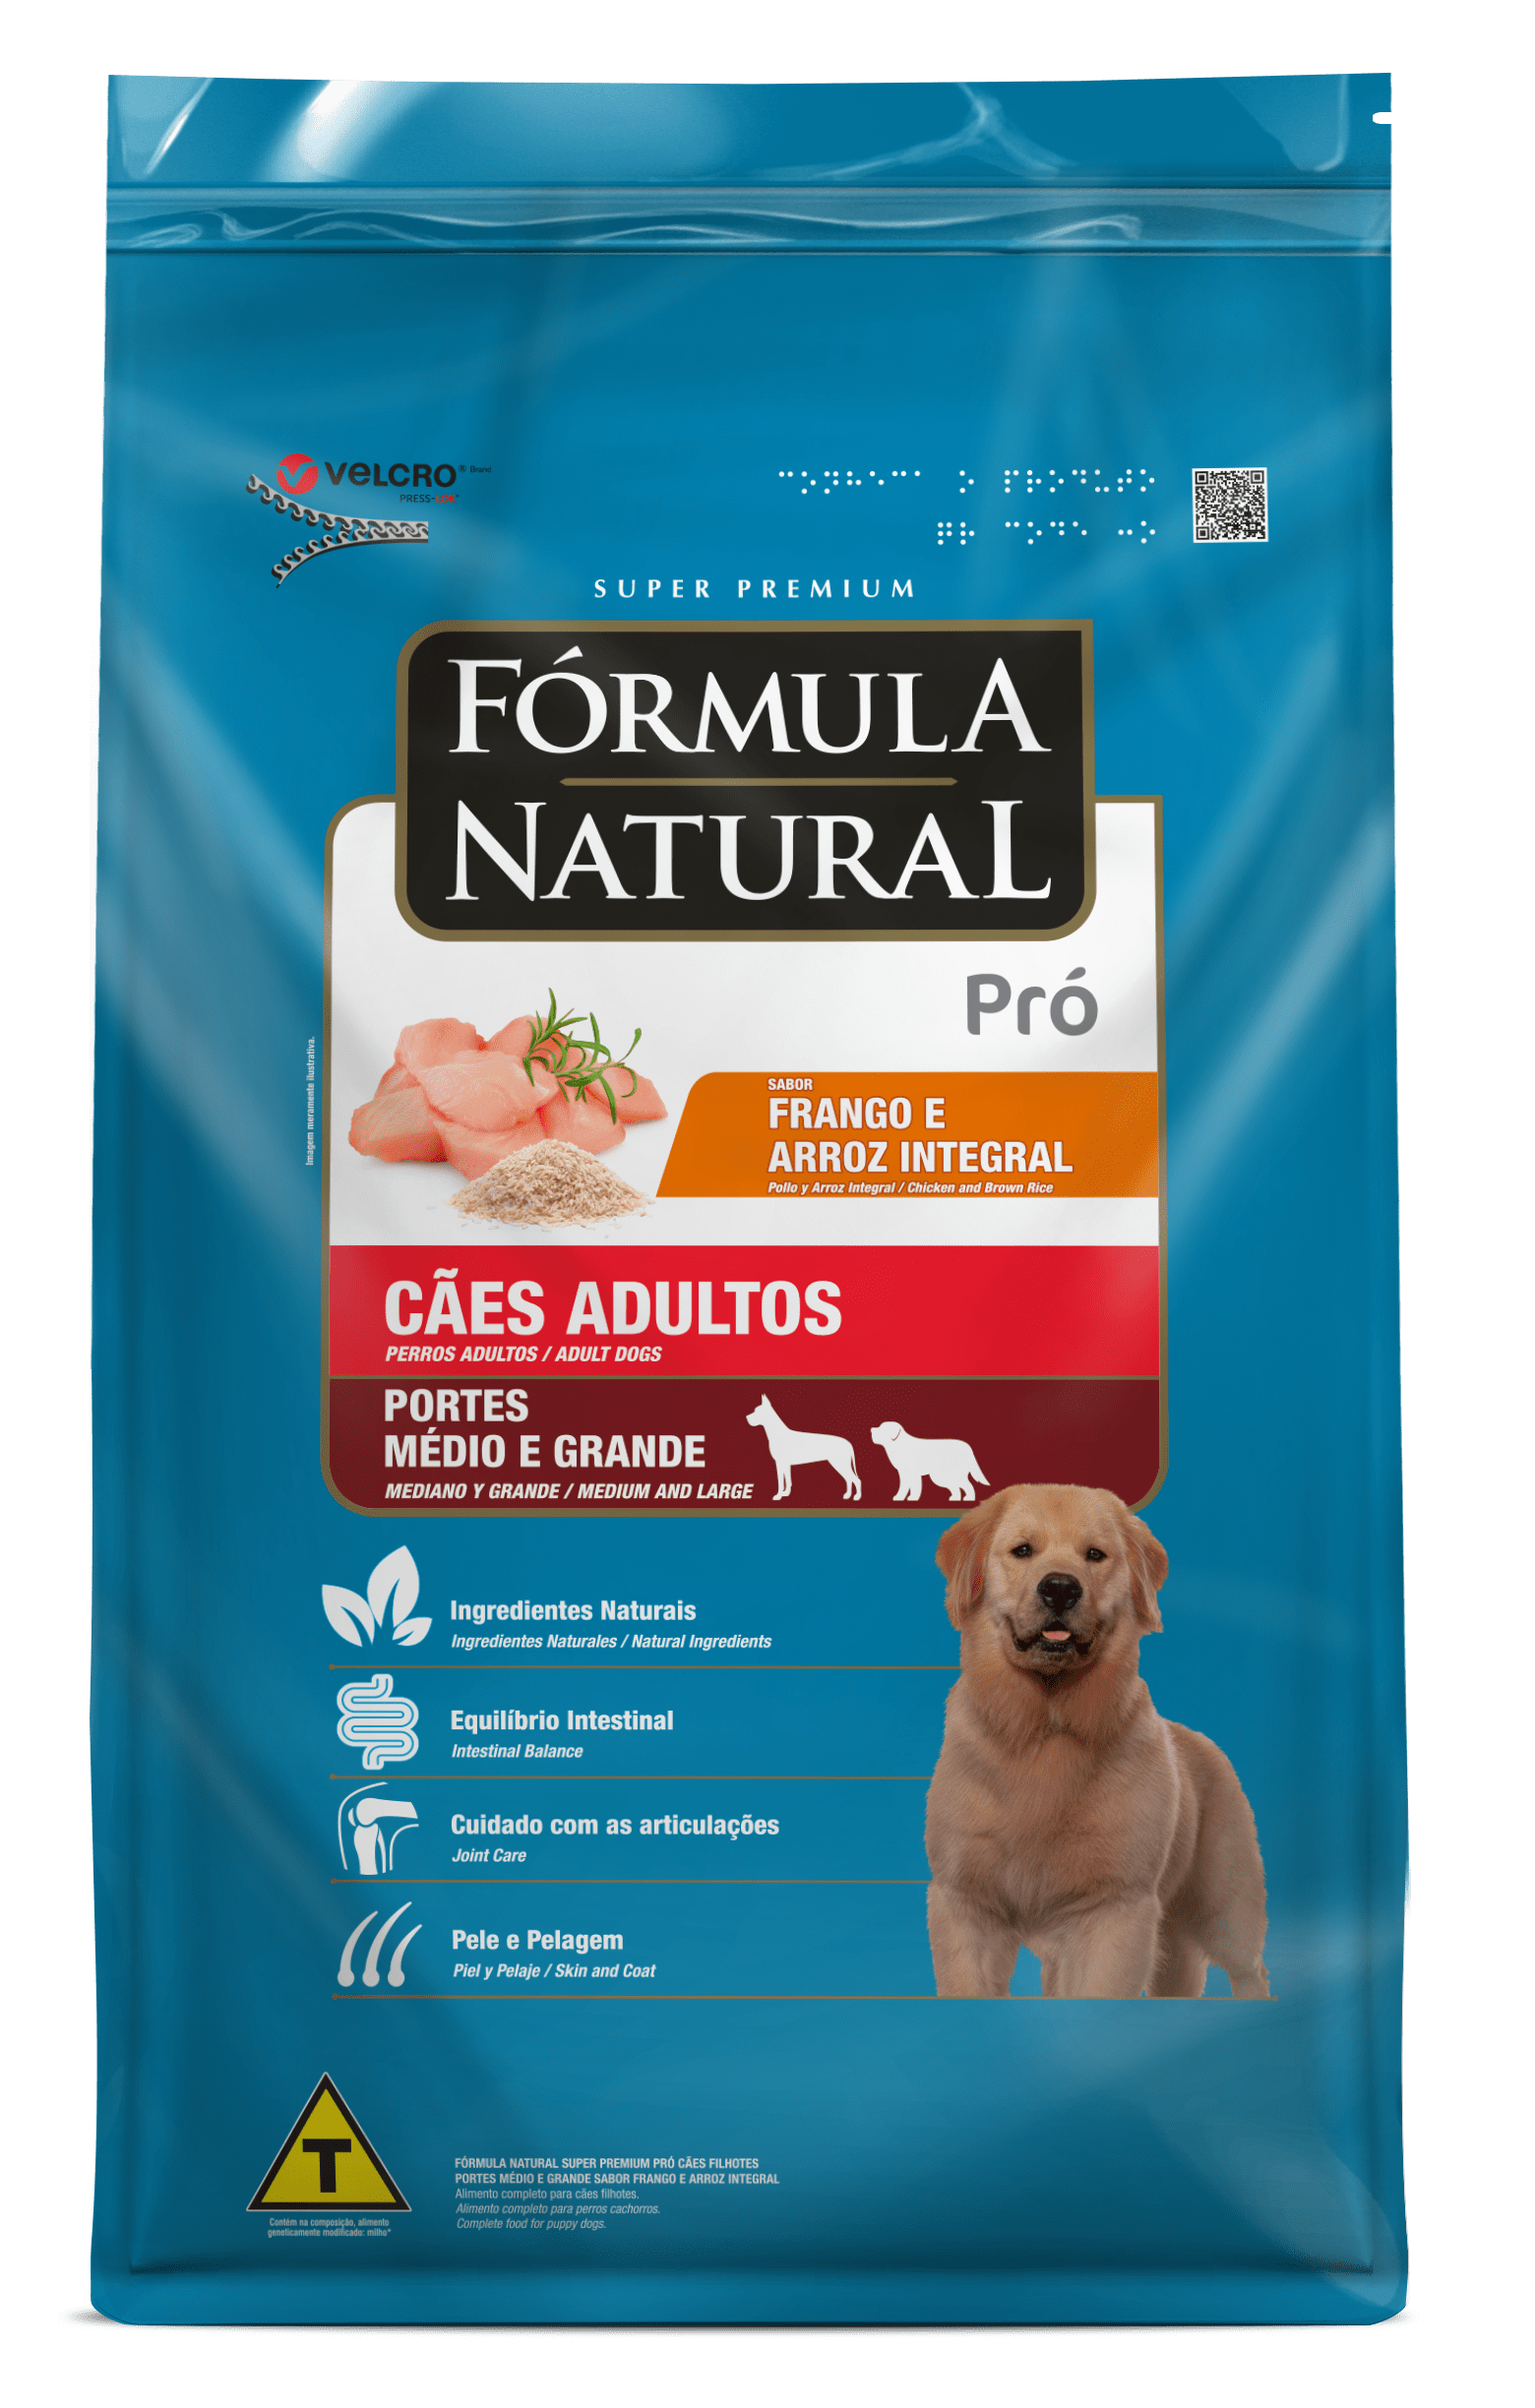 Fórmula Natural Super Premium Pró Adult Dogs Medium and Large breeds – Chicken and Brown Rice flavor